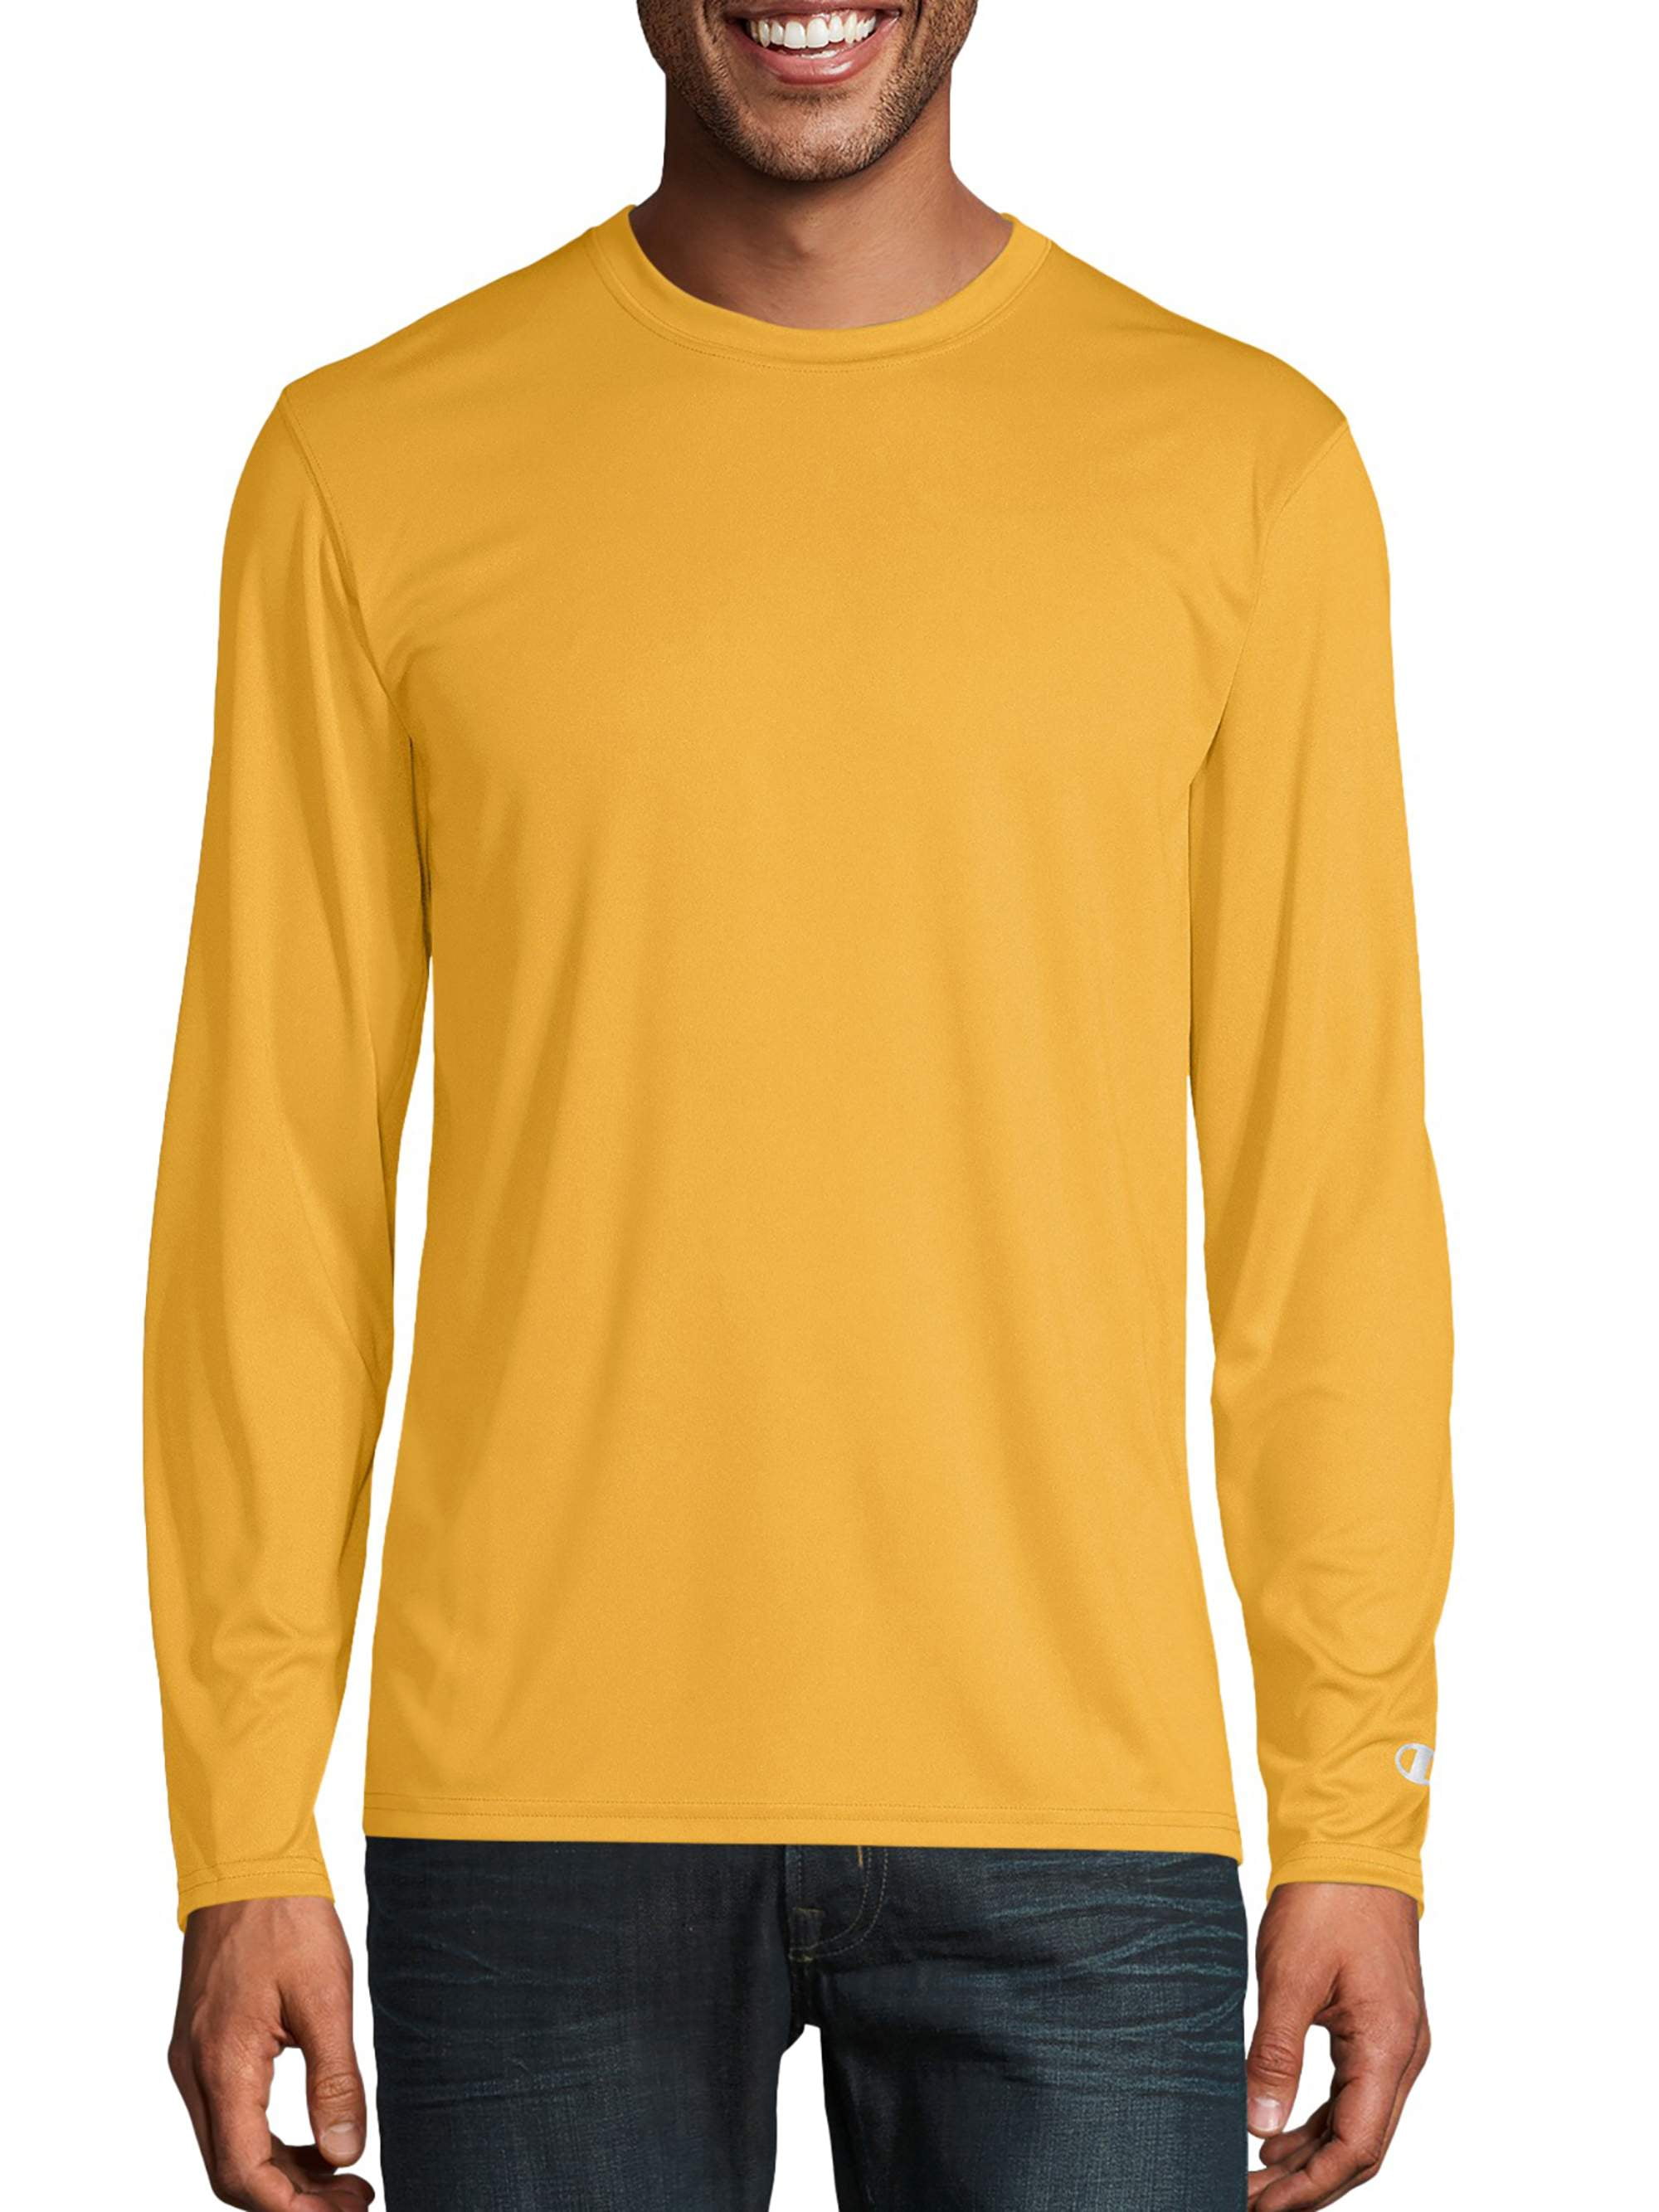 long sleeve champion shirt yellow